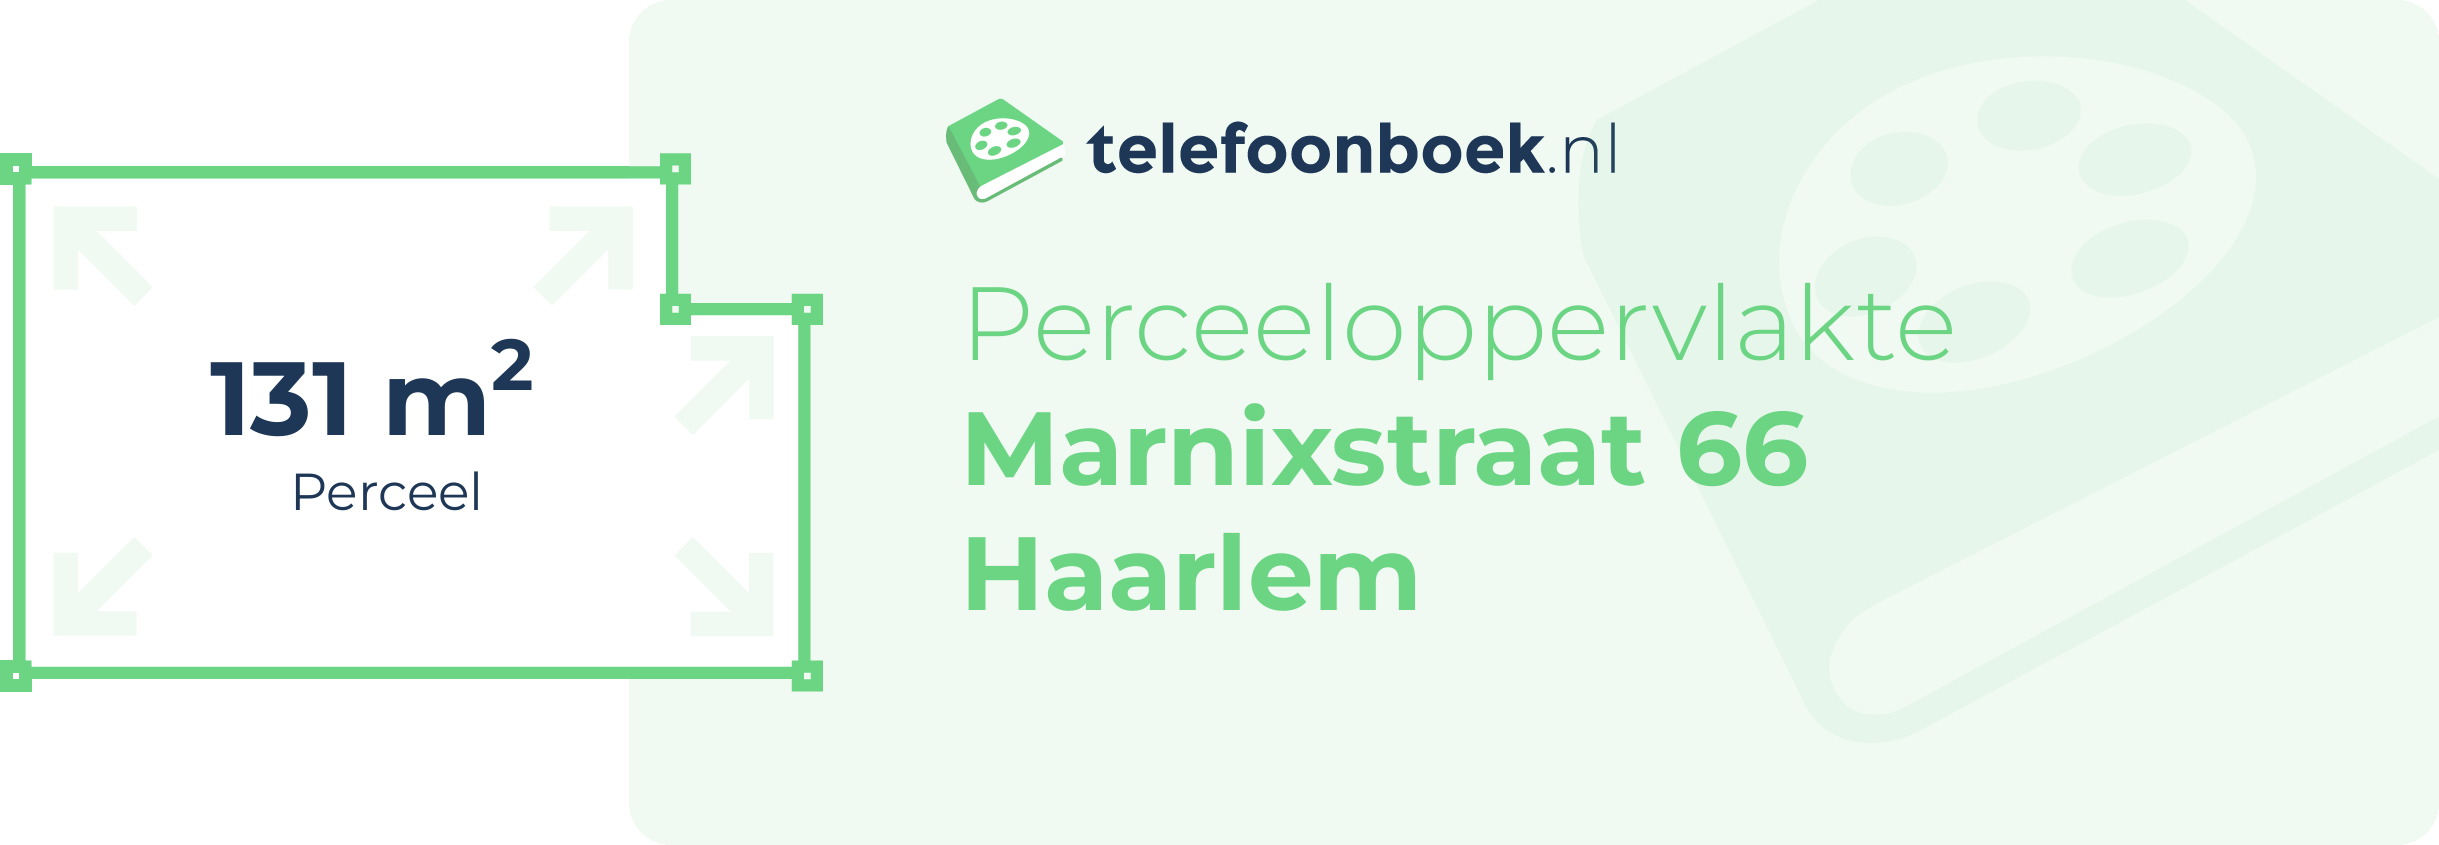 Perceeloppervlakte Marnixstraat 66 Haarlem